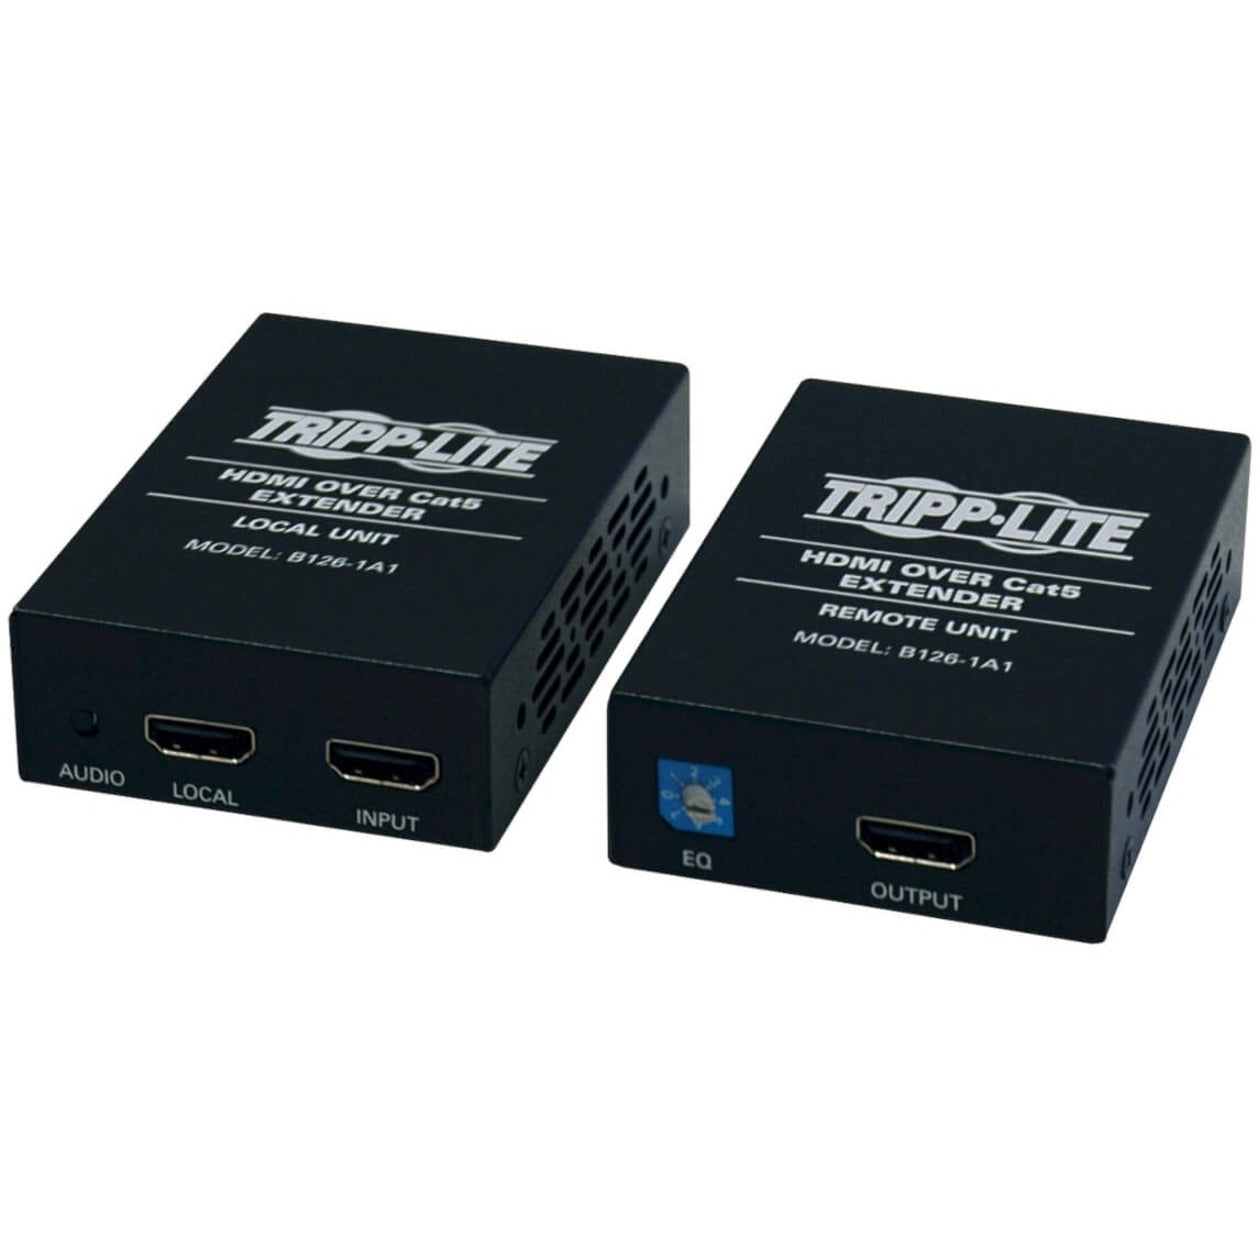 Tripp Lite B126-1A1 视频扩展器/控制台，HDMI 发射器/接收器，范围 150 英尺，TAA 符合规定 Tripp Lite 崔普莱特